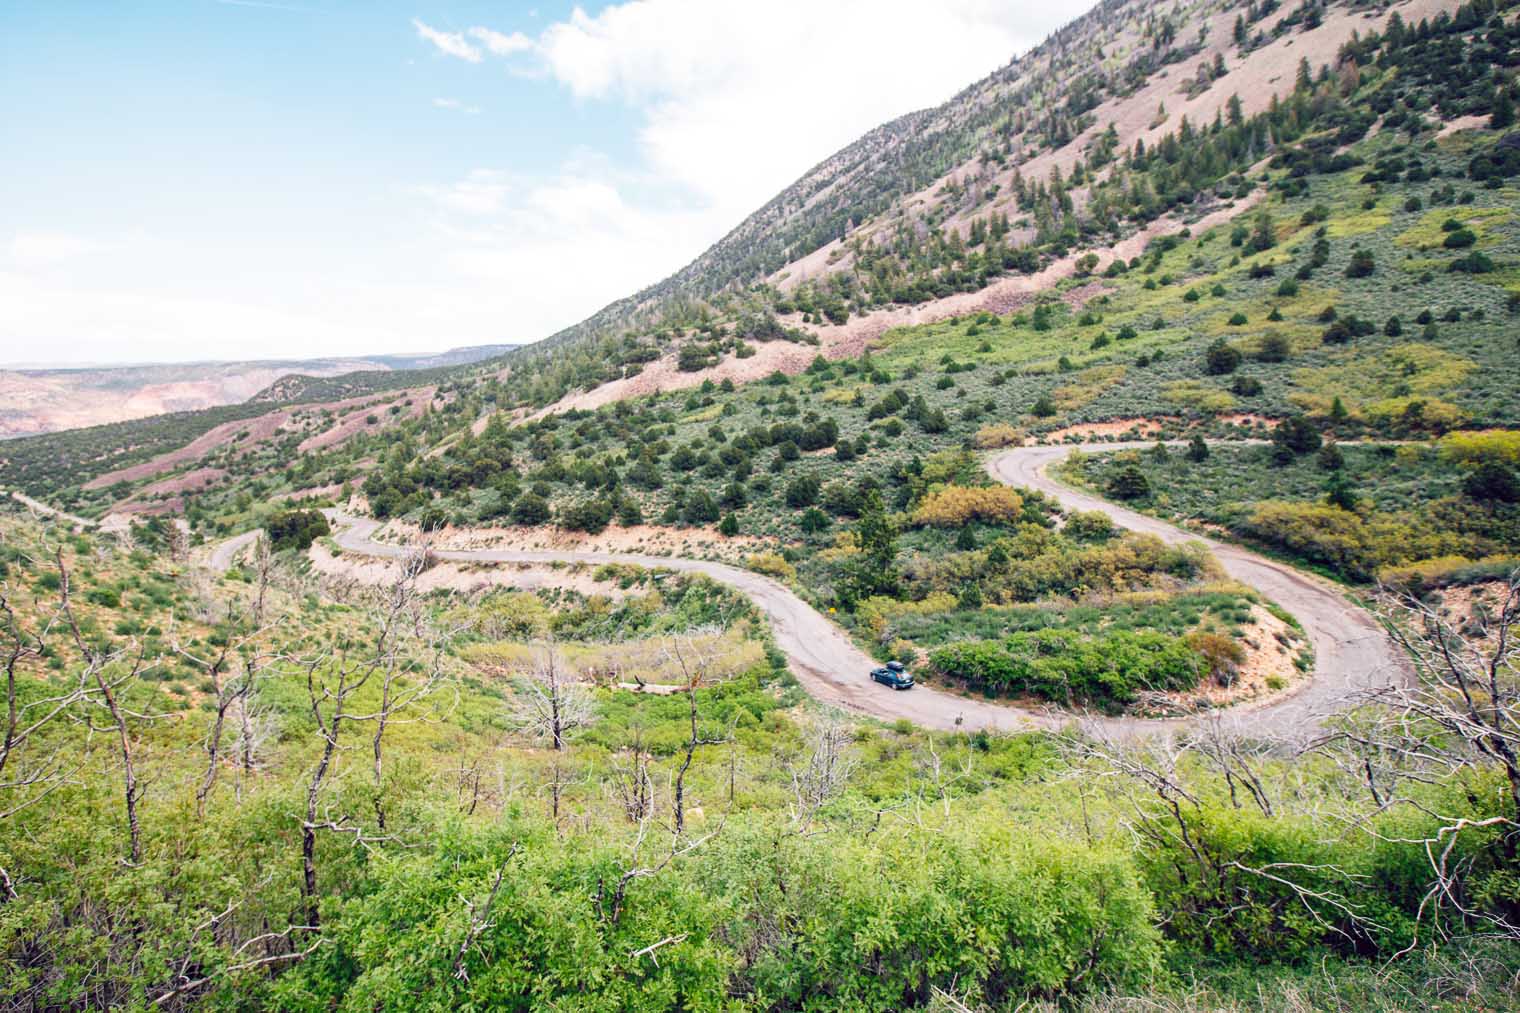 Winding road that is part of the La Sal Mountain Loop